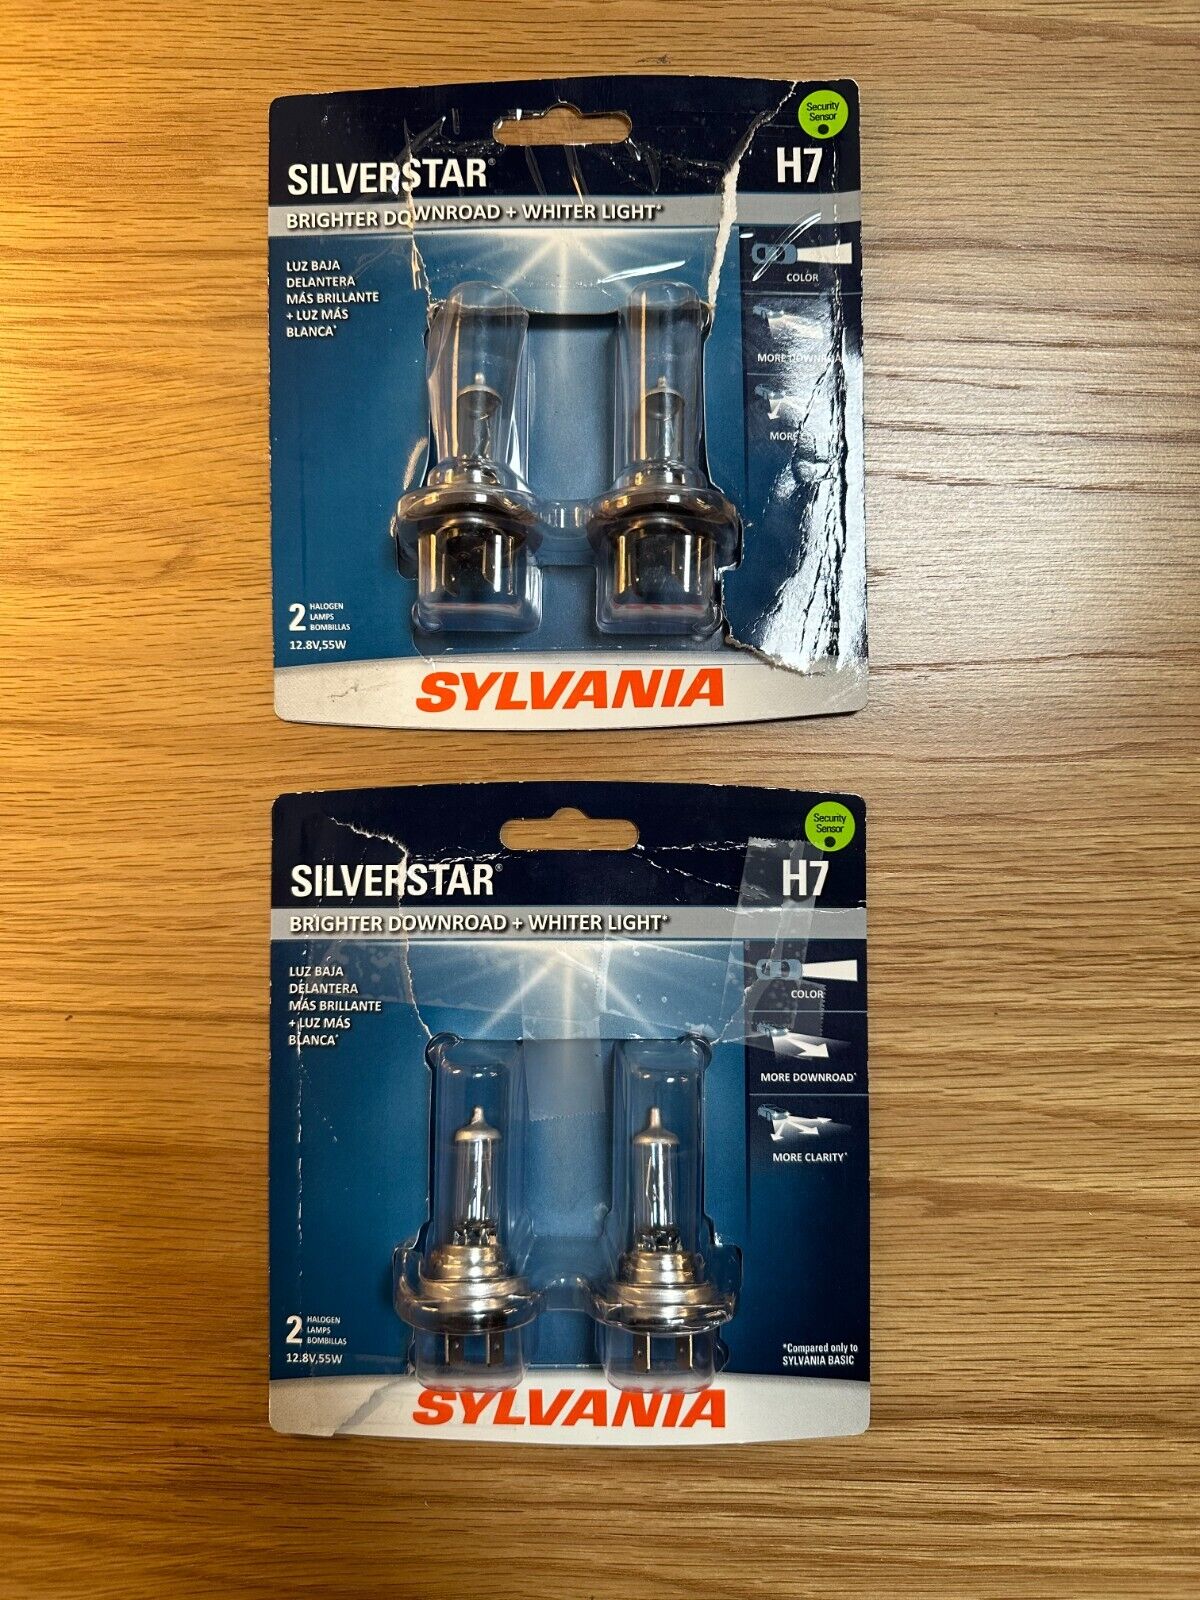 Sylvania Silverstar H7 Pair Set High Performance Headlight 4 Bulbs, 2 sets of 2